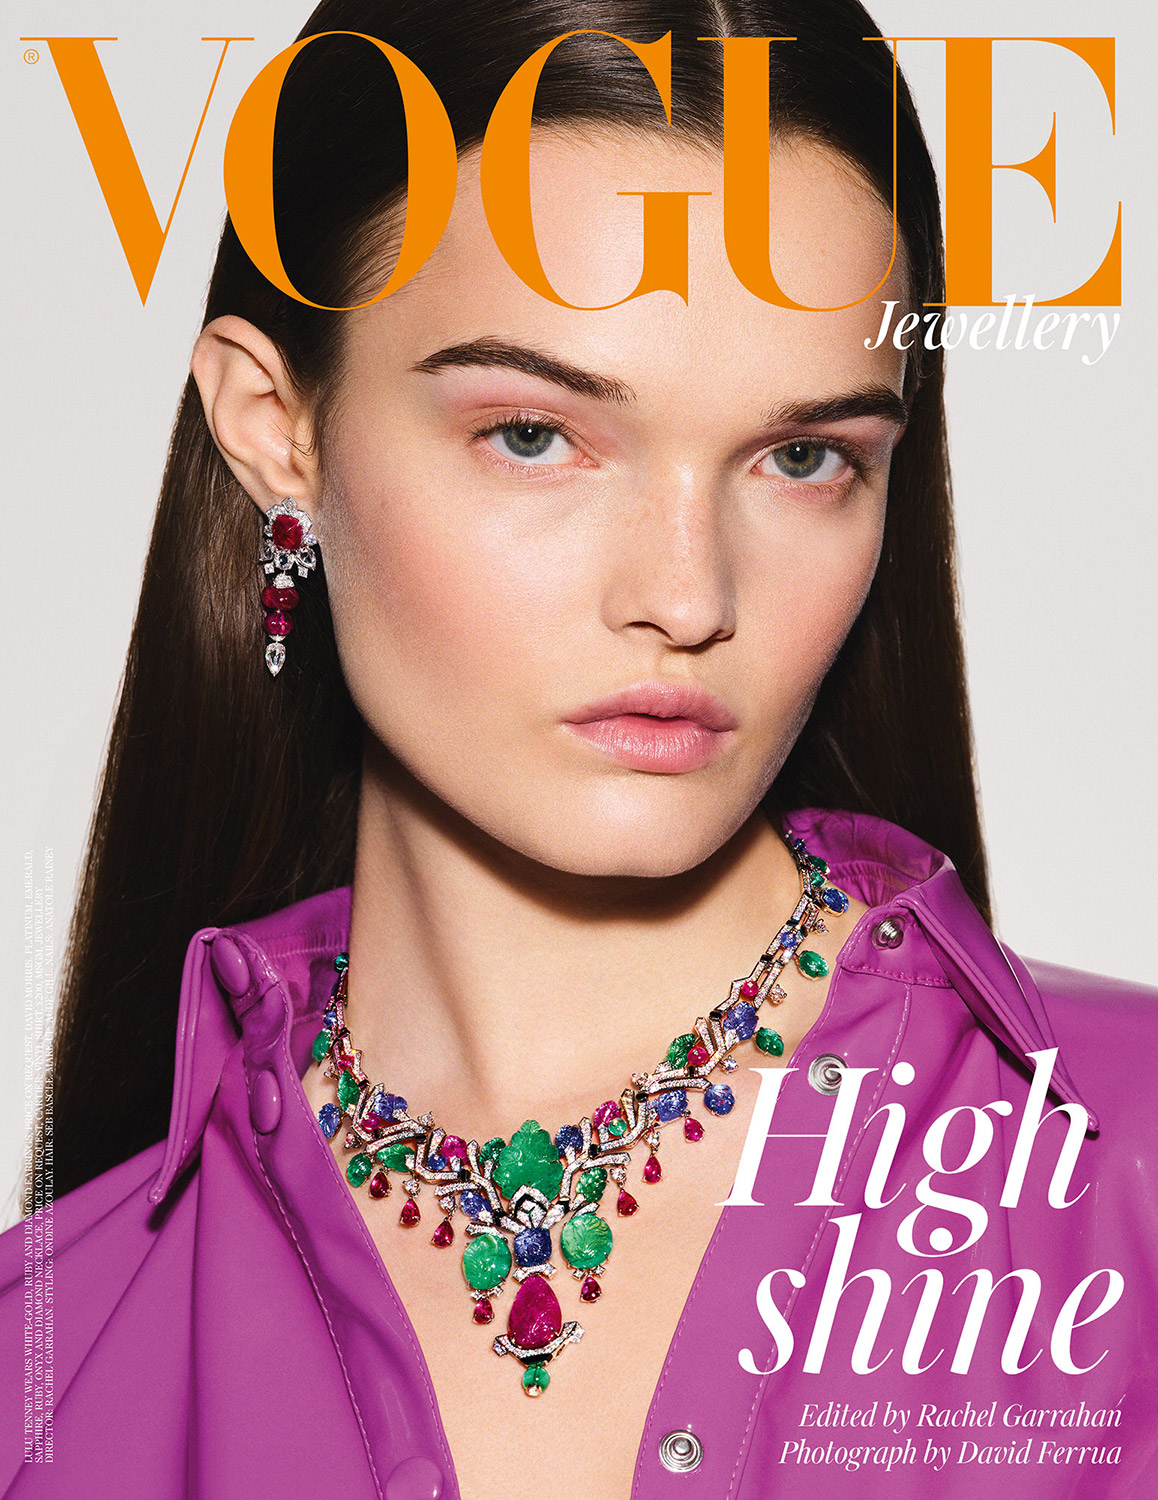 OndineAzoulay_-British_Vogue_August21_Jewellery_Issue_1.jpg